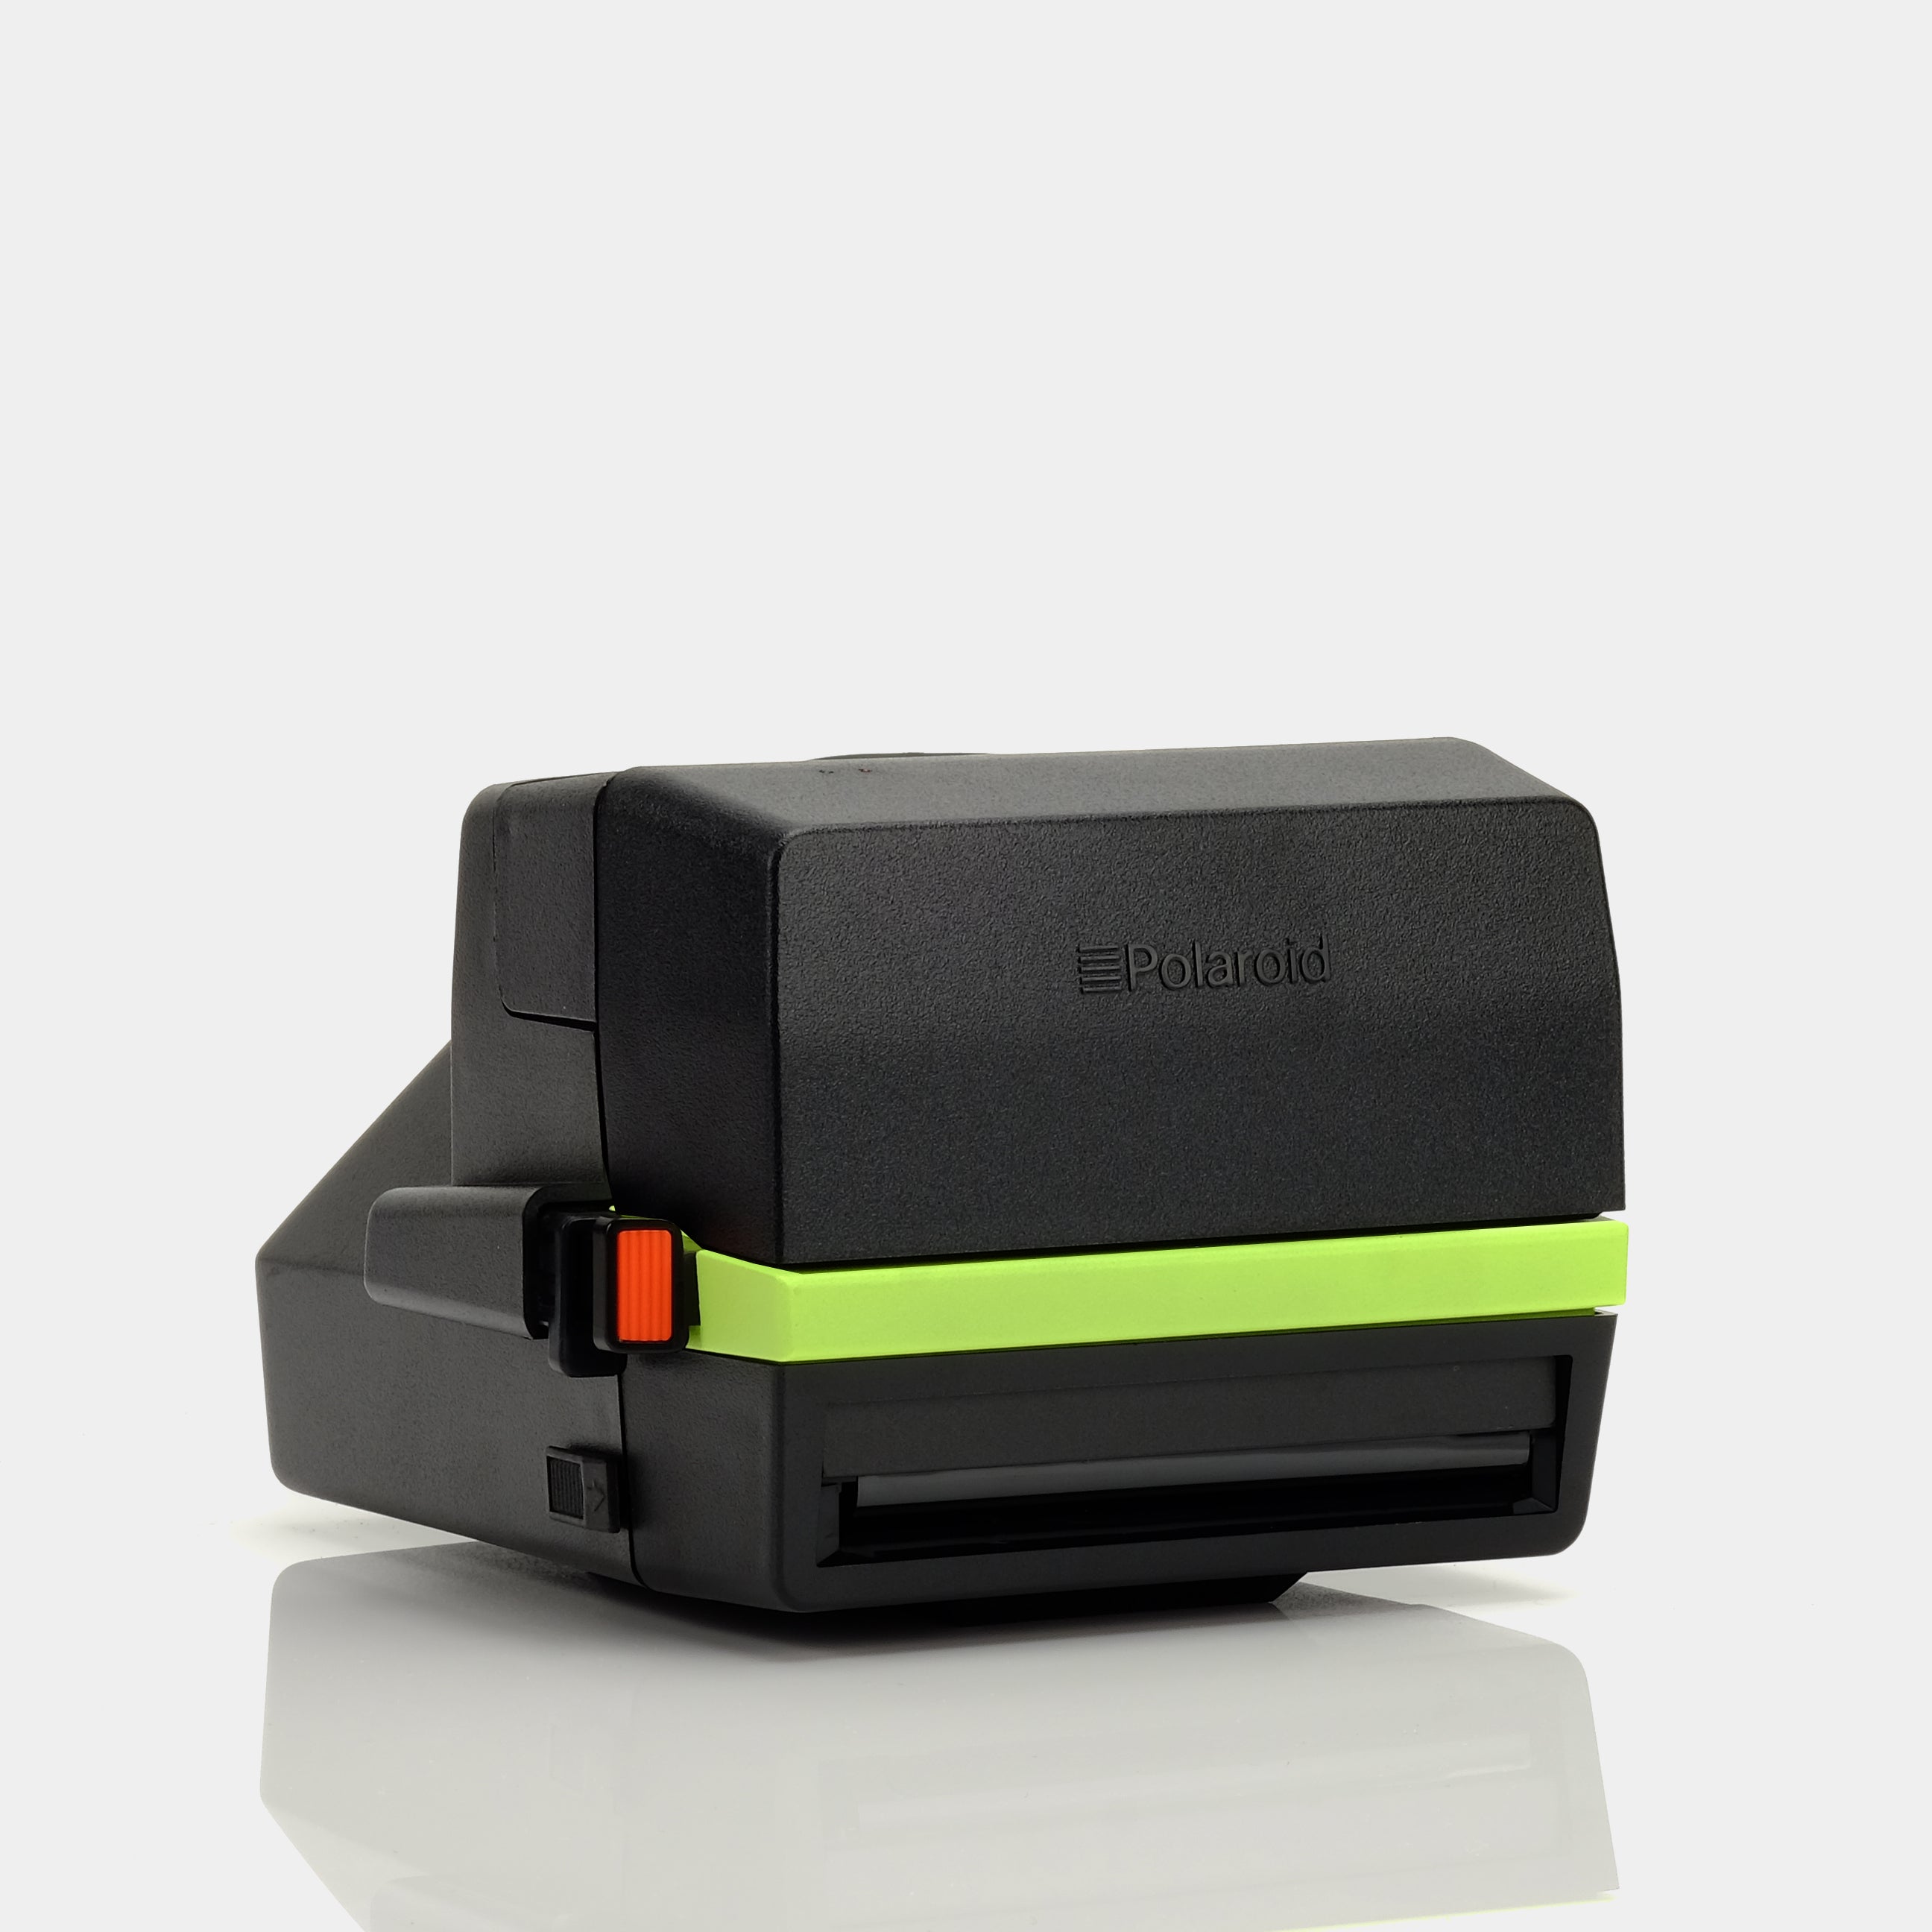 Polaroid 600 Lime Green Instant Film Camera